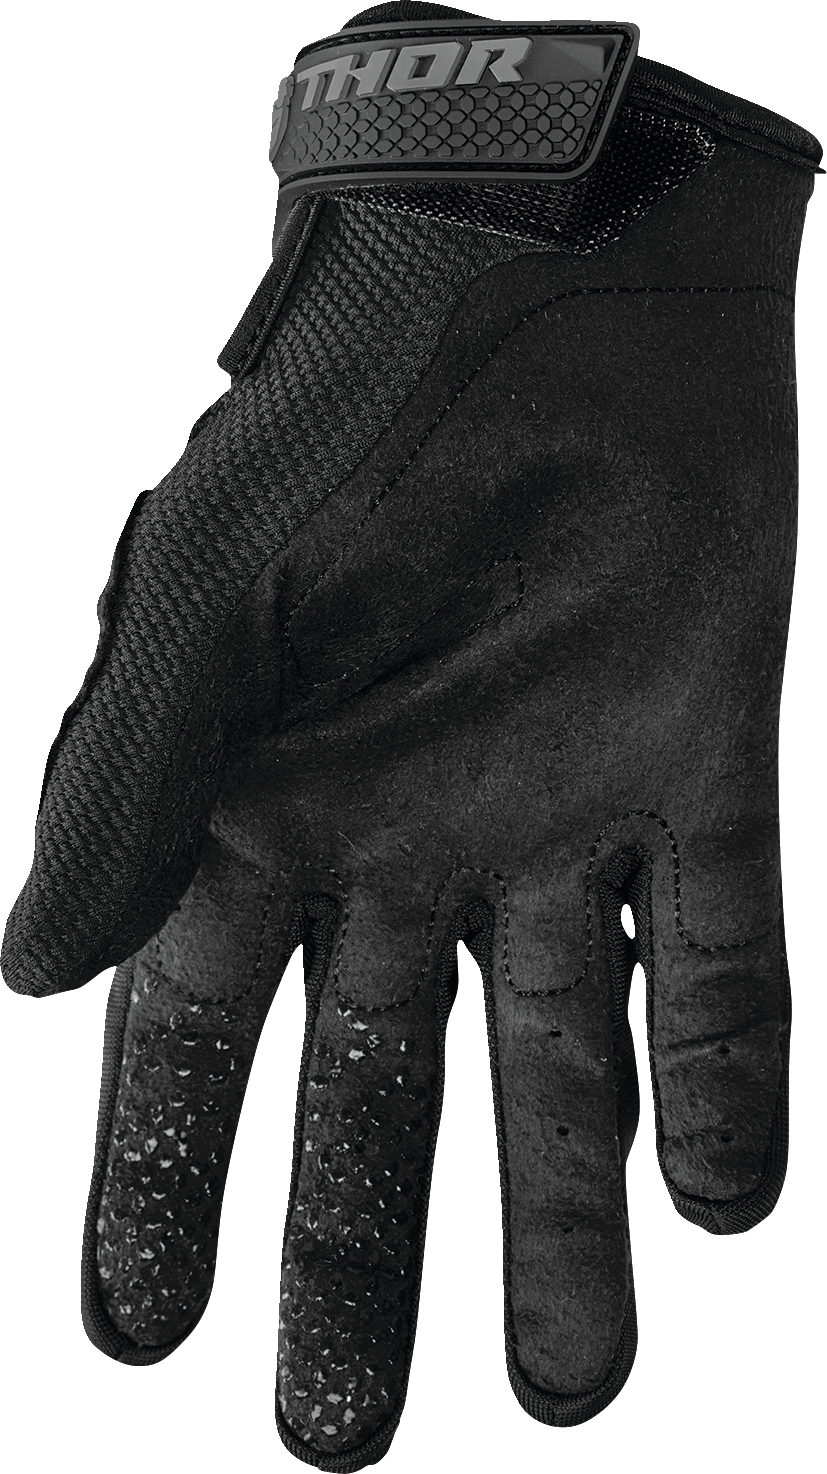 THOR Women's Sector Gloves - Black/Gray - XL 3331-0241